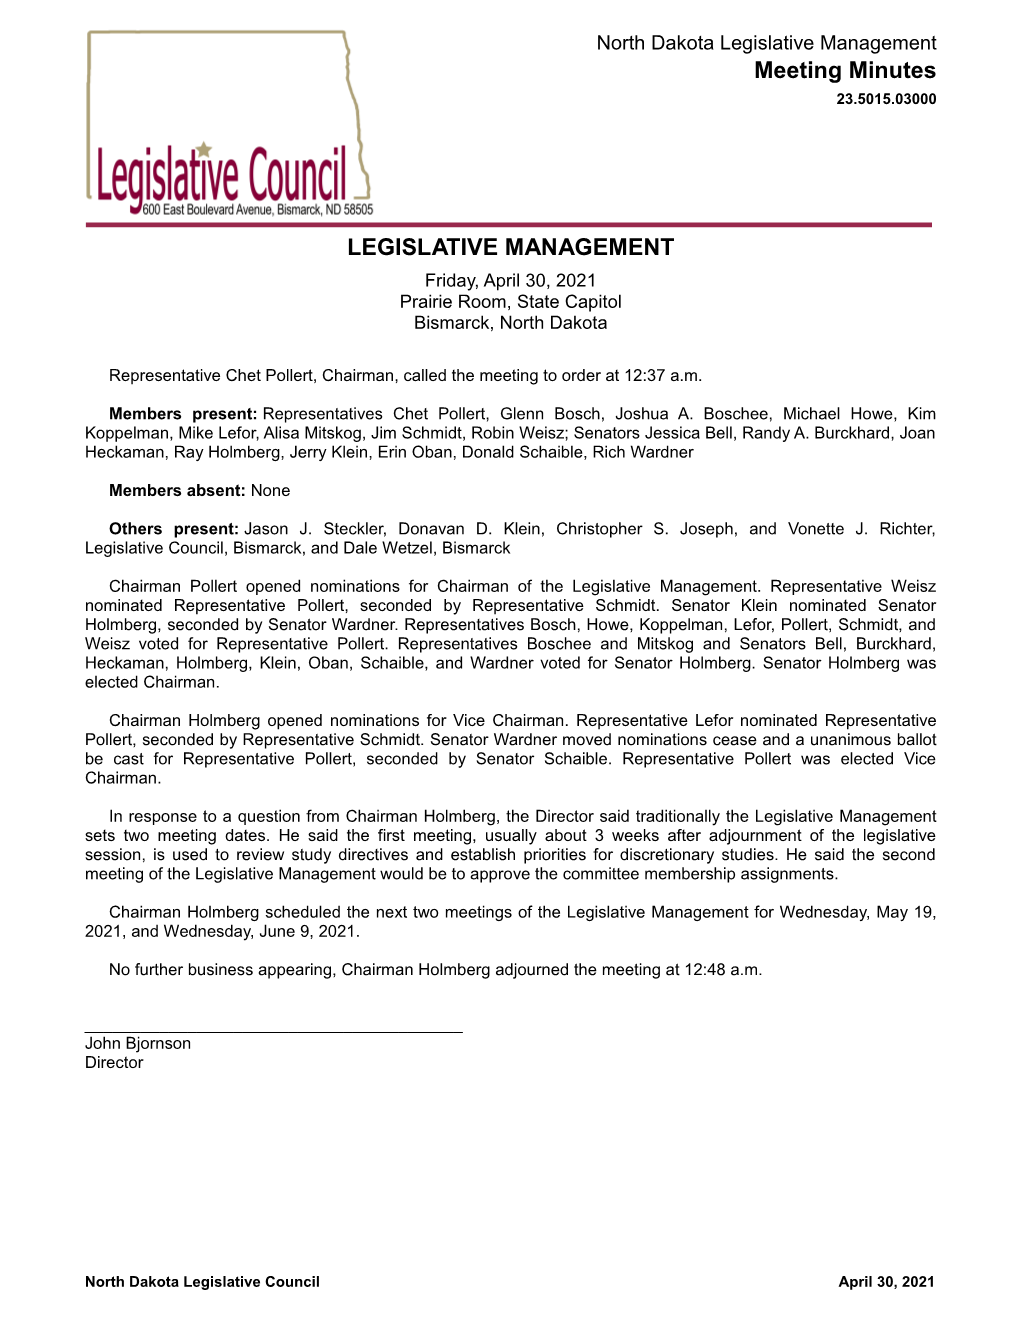 Legislative Management Meeting Minutes 23.5015.03000